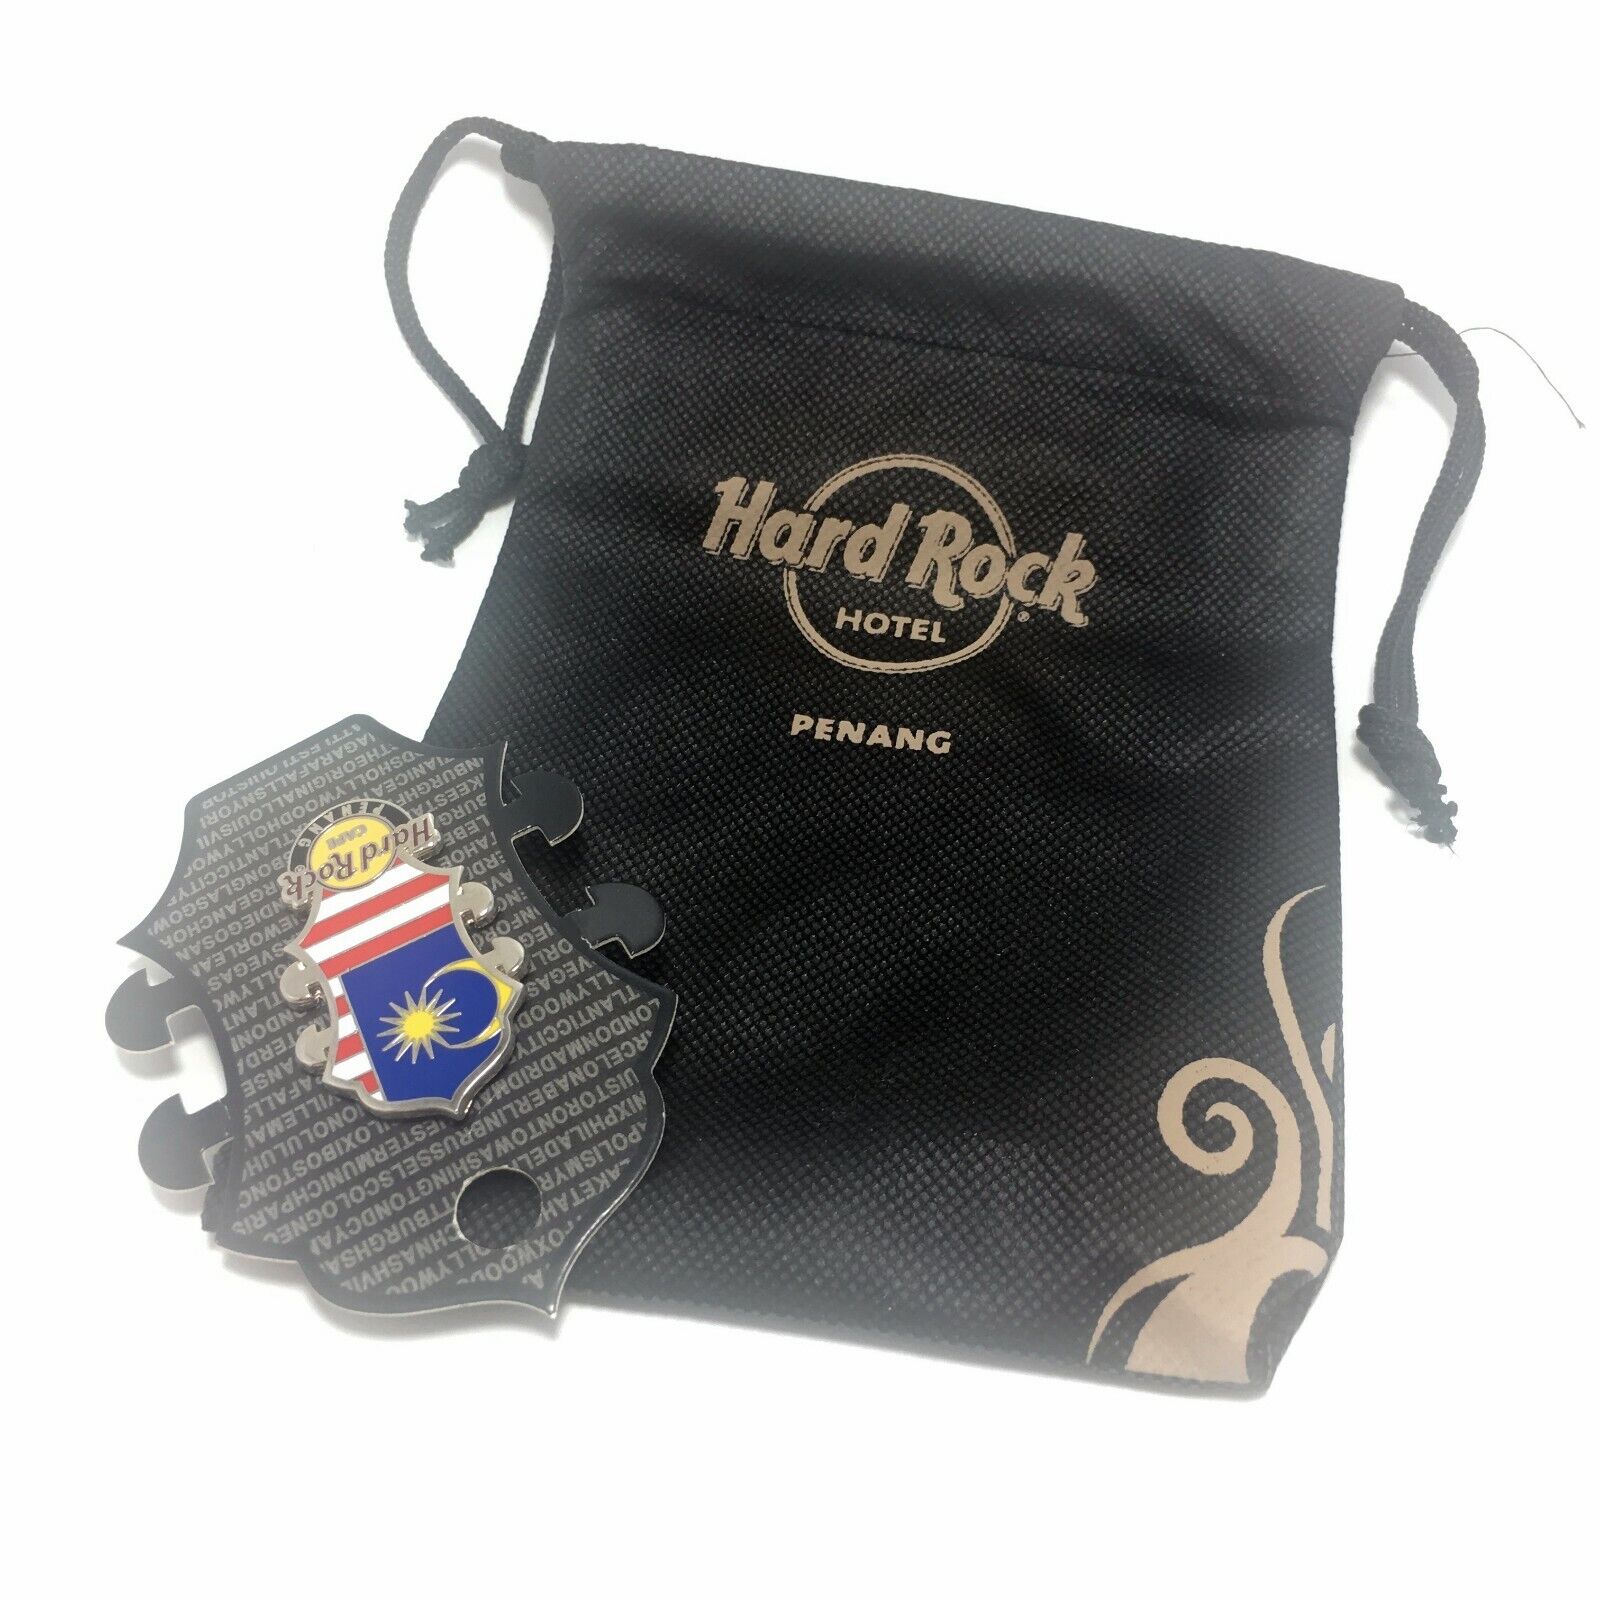 Hard Rock Cafe Pins 2017 Classic Round Logo Penang City Malaysia Free HRC Bag